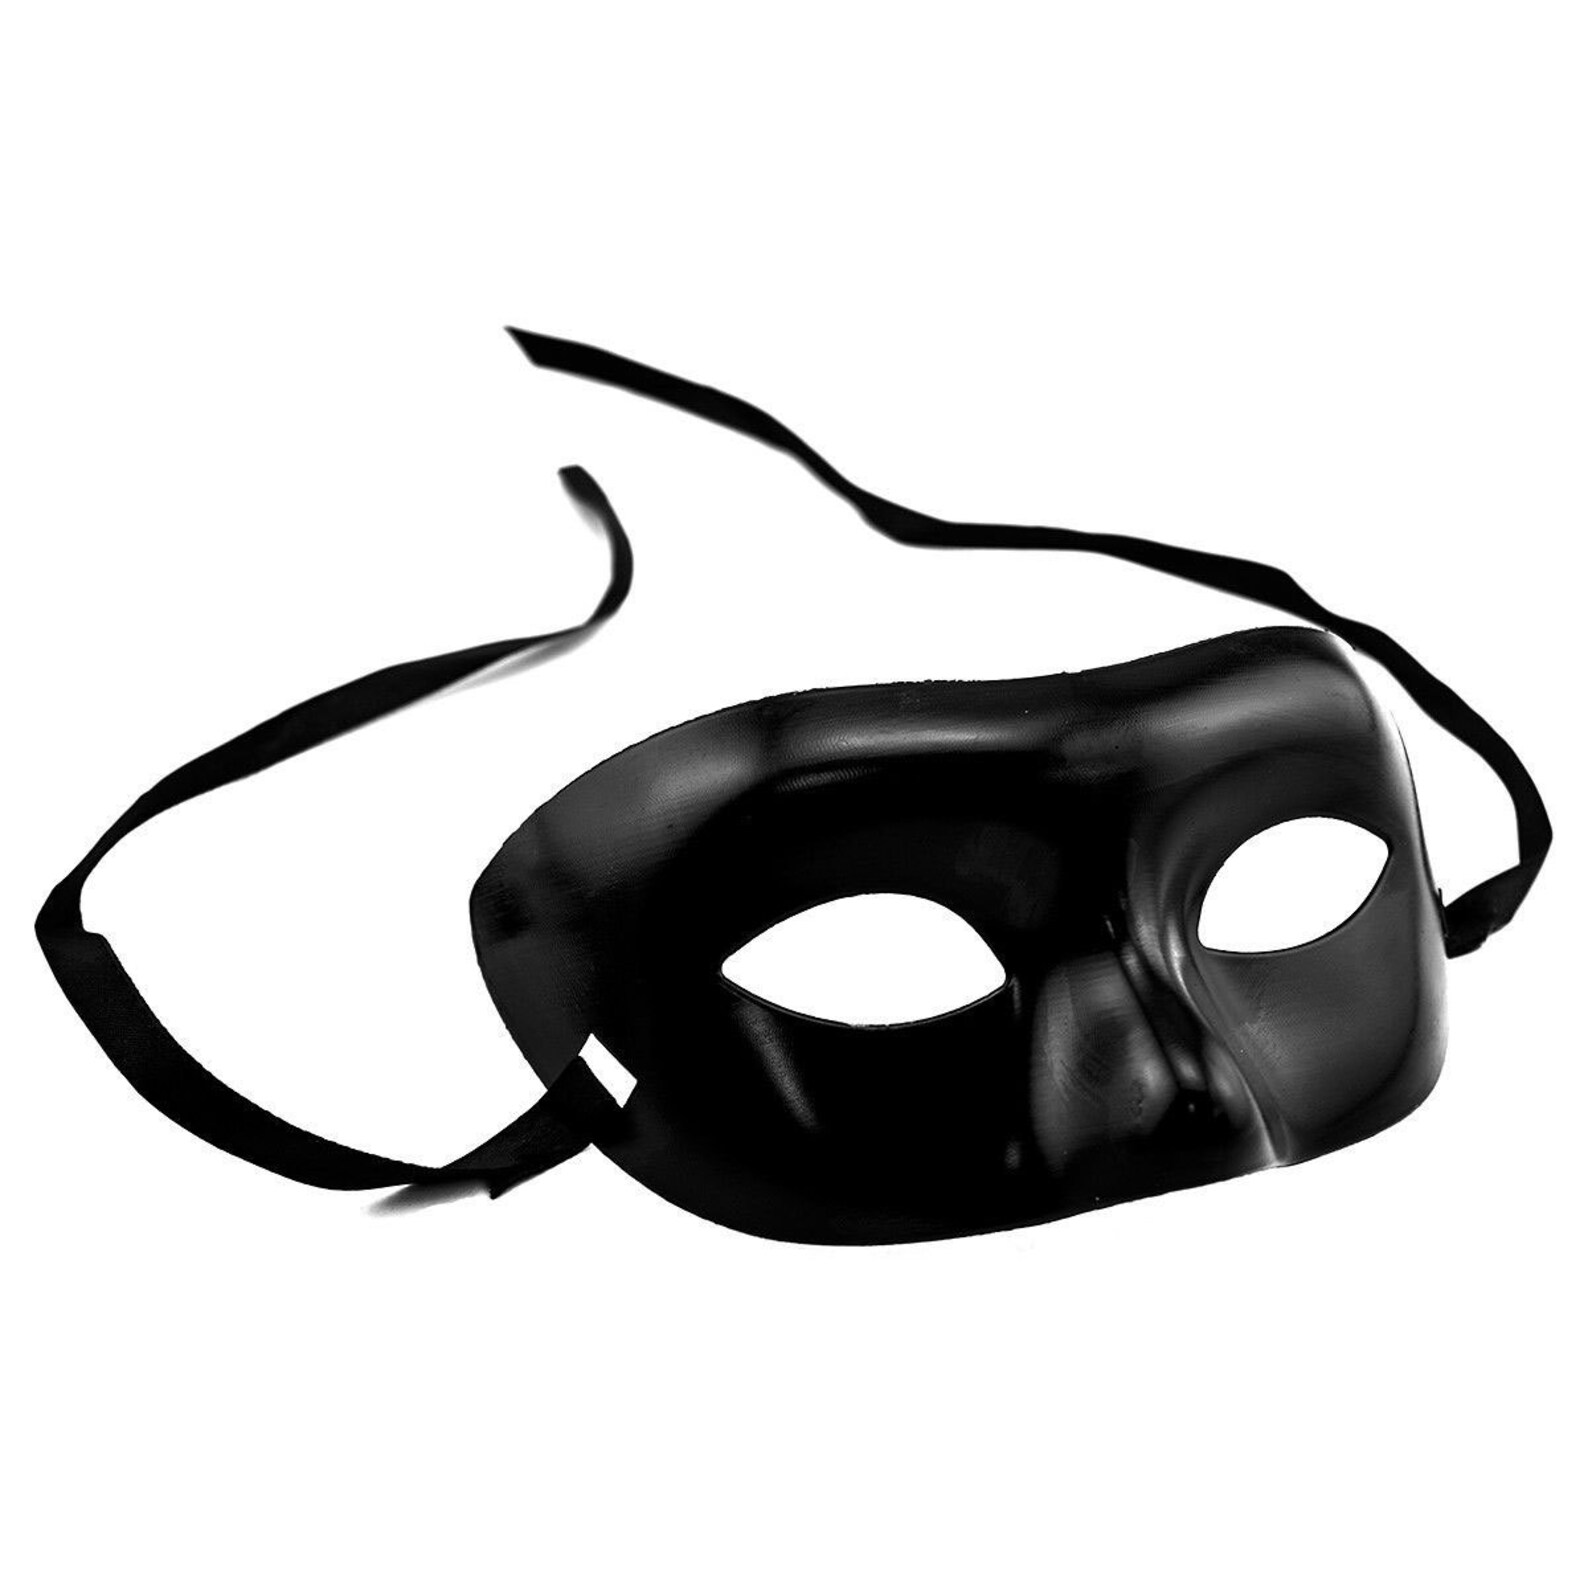 Черная маска на глаза. Маска "зорро", чёрная. Карнавальная маска «мужчина». Маска карнавальная черная. Черная карнавальная маска для мужчин.